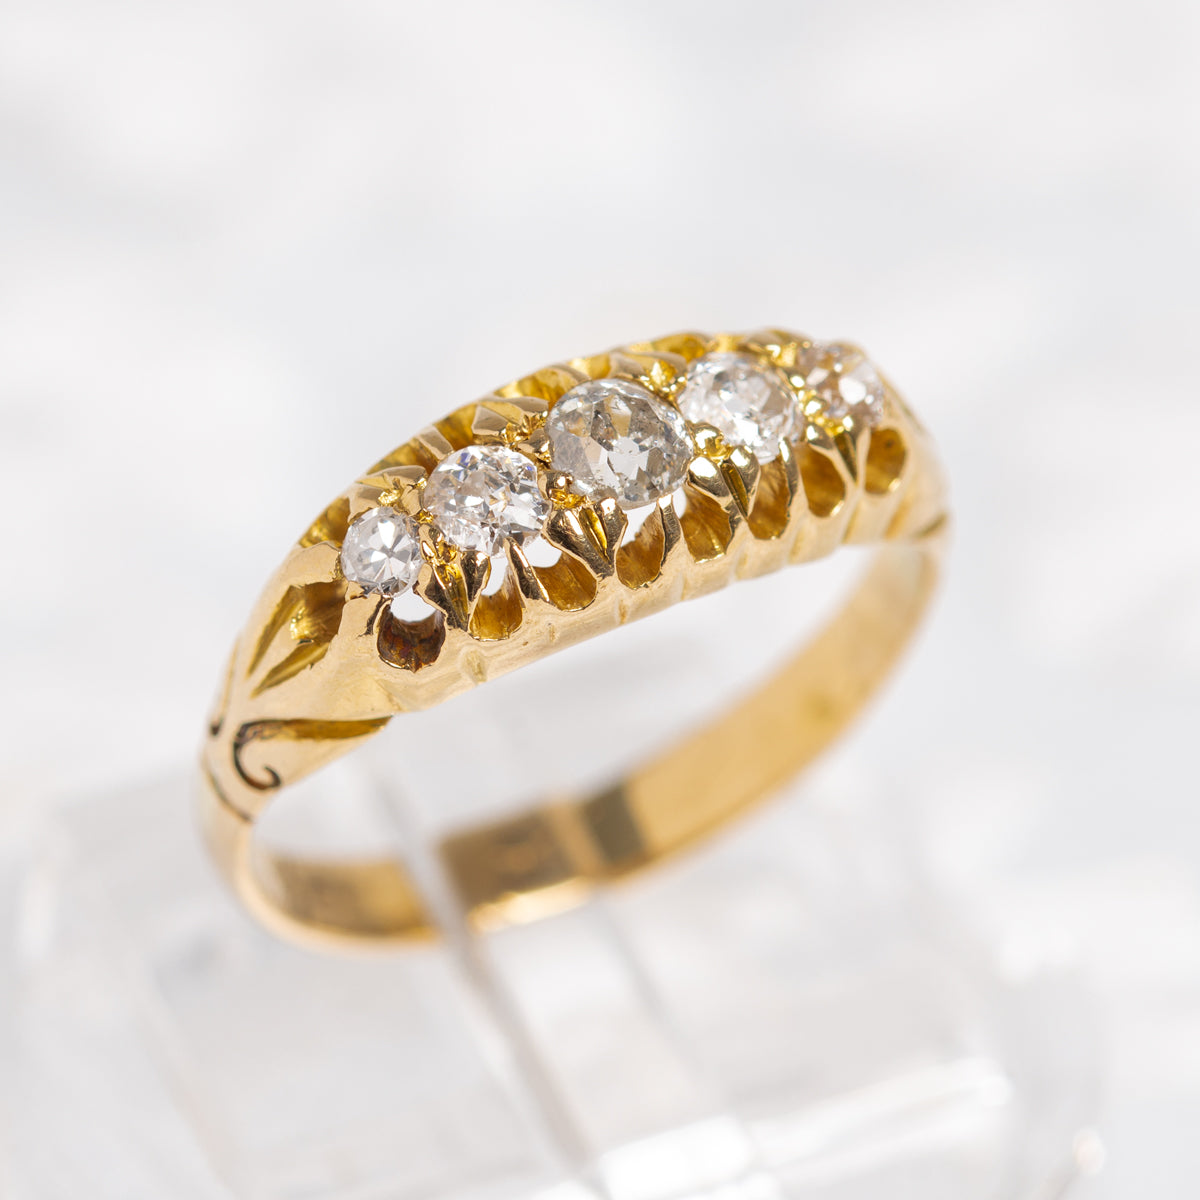 Antique Edwardian Five Diamond Gemstone Ring In 18ct Gold UK Size K  (A1397)